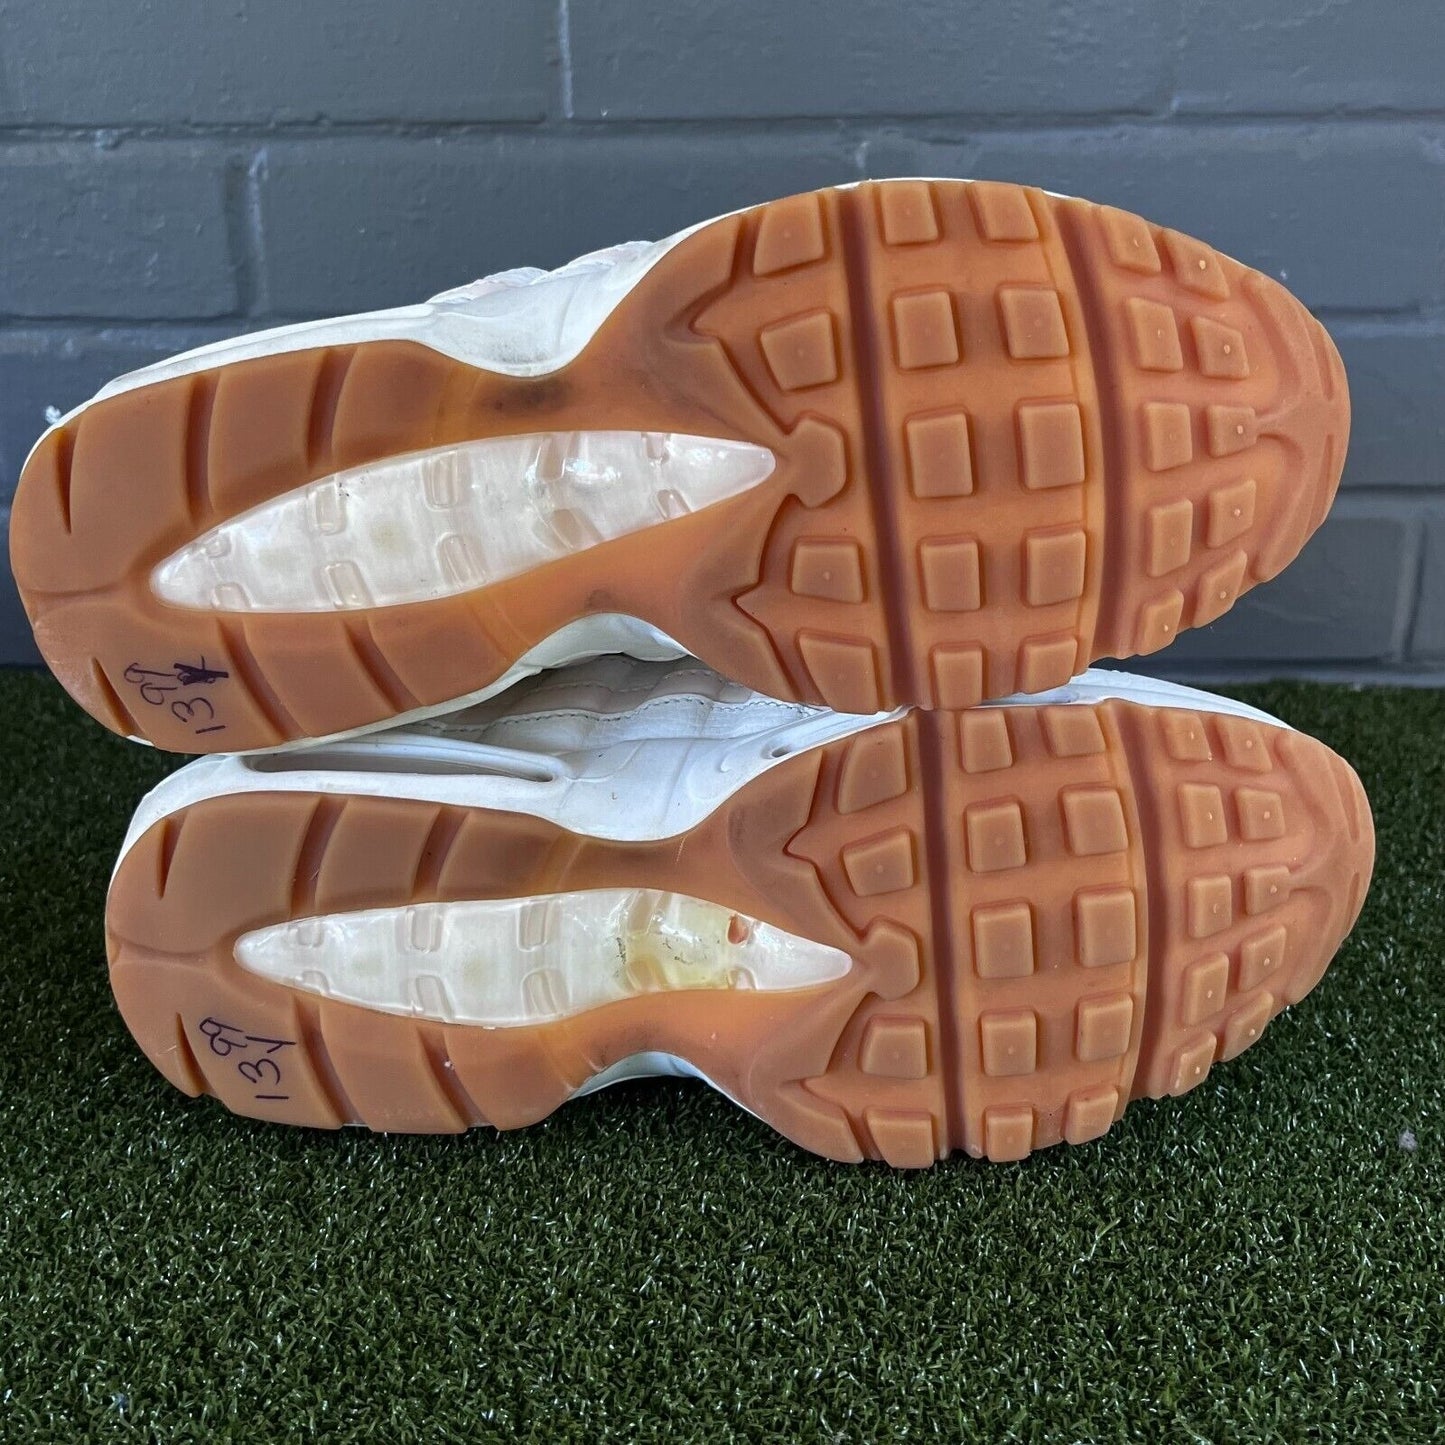 Nike Air Max 95 Sail Gum White/Guava Ice 307960-111 Sneakers Womens Size 8